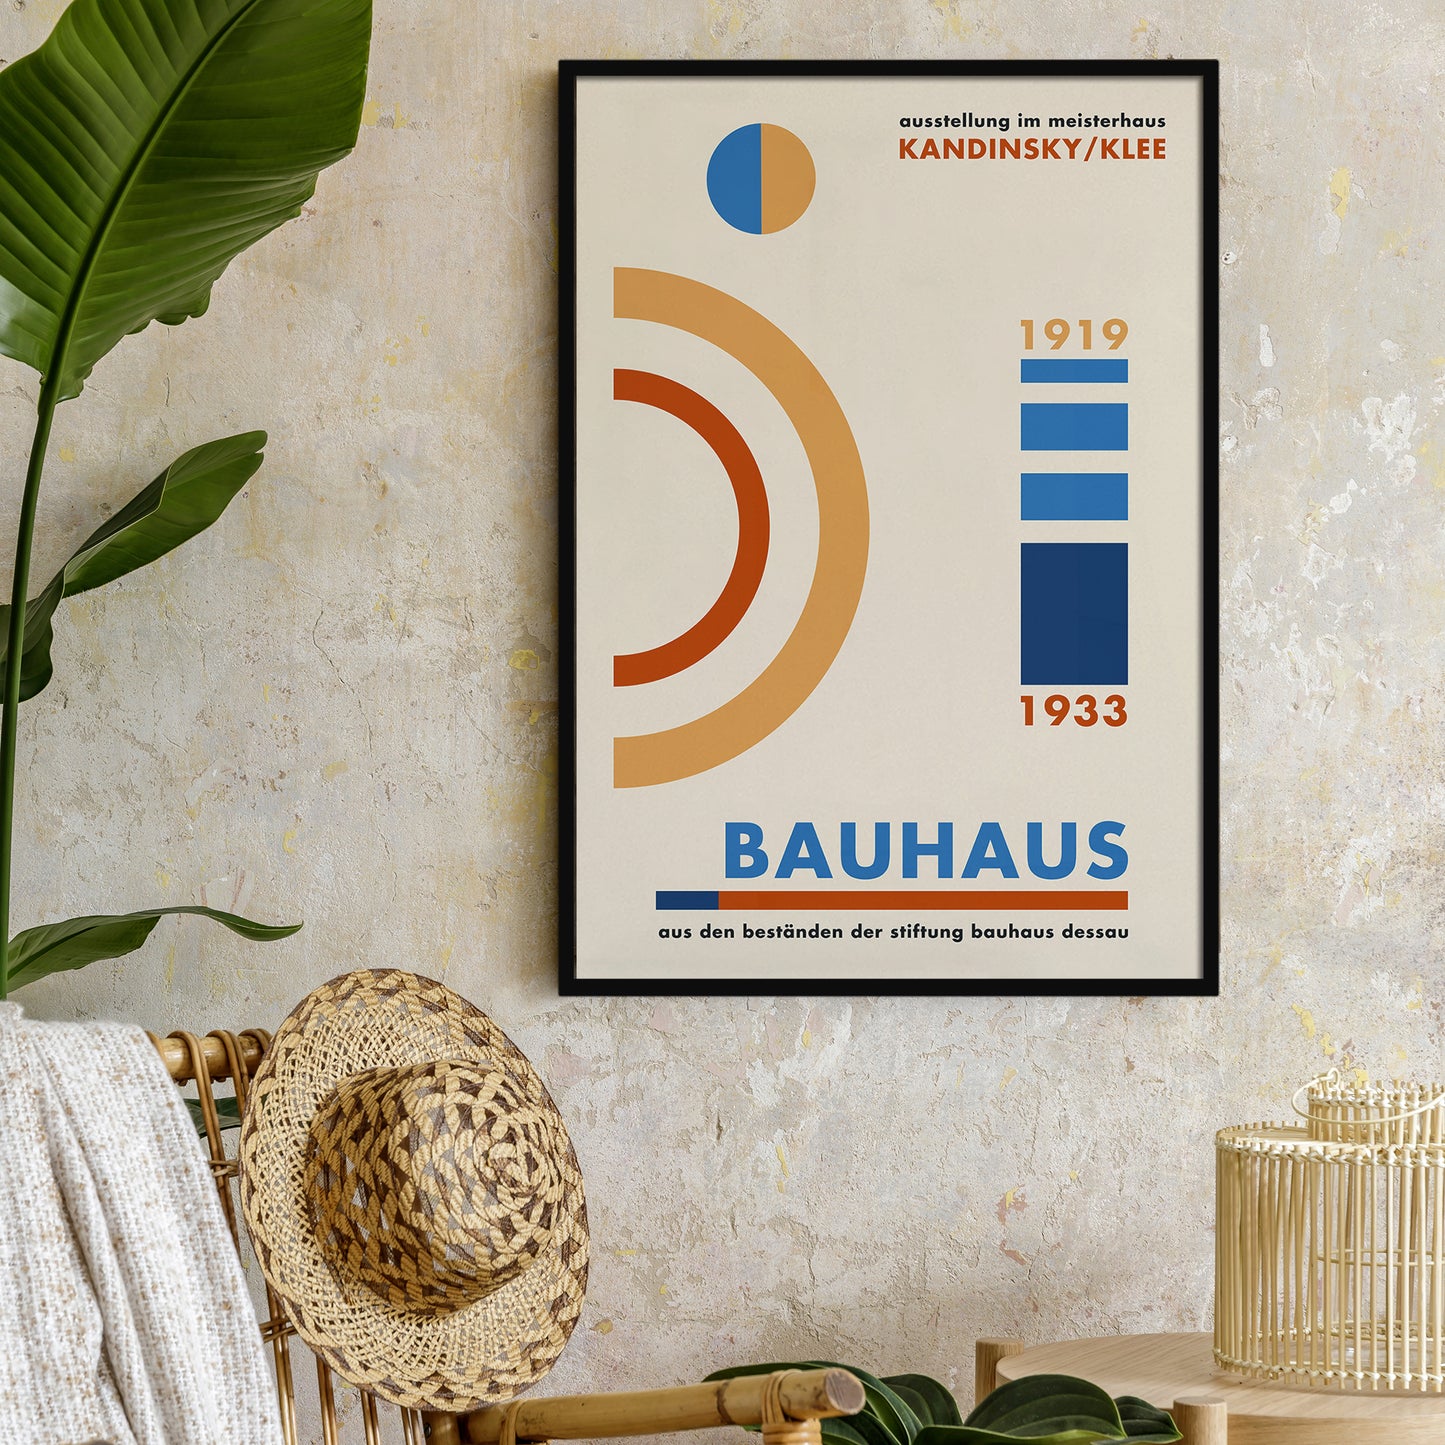 Bauhaus Kandinsky/Klee Print